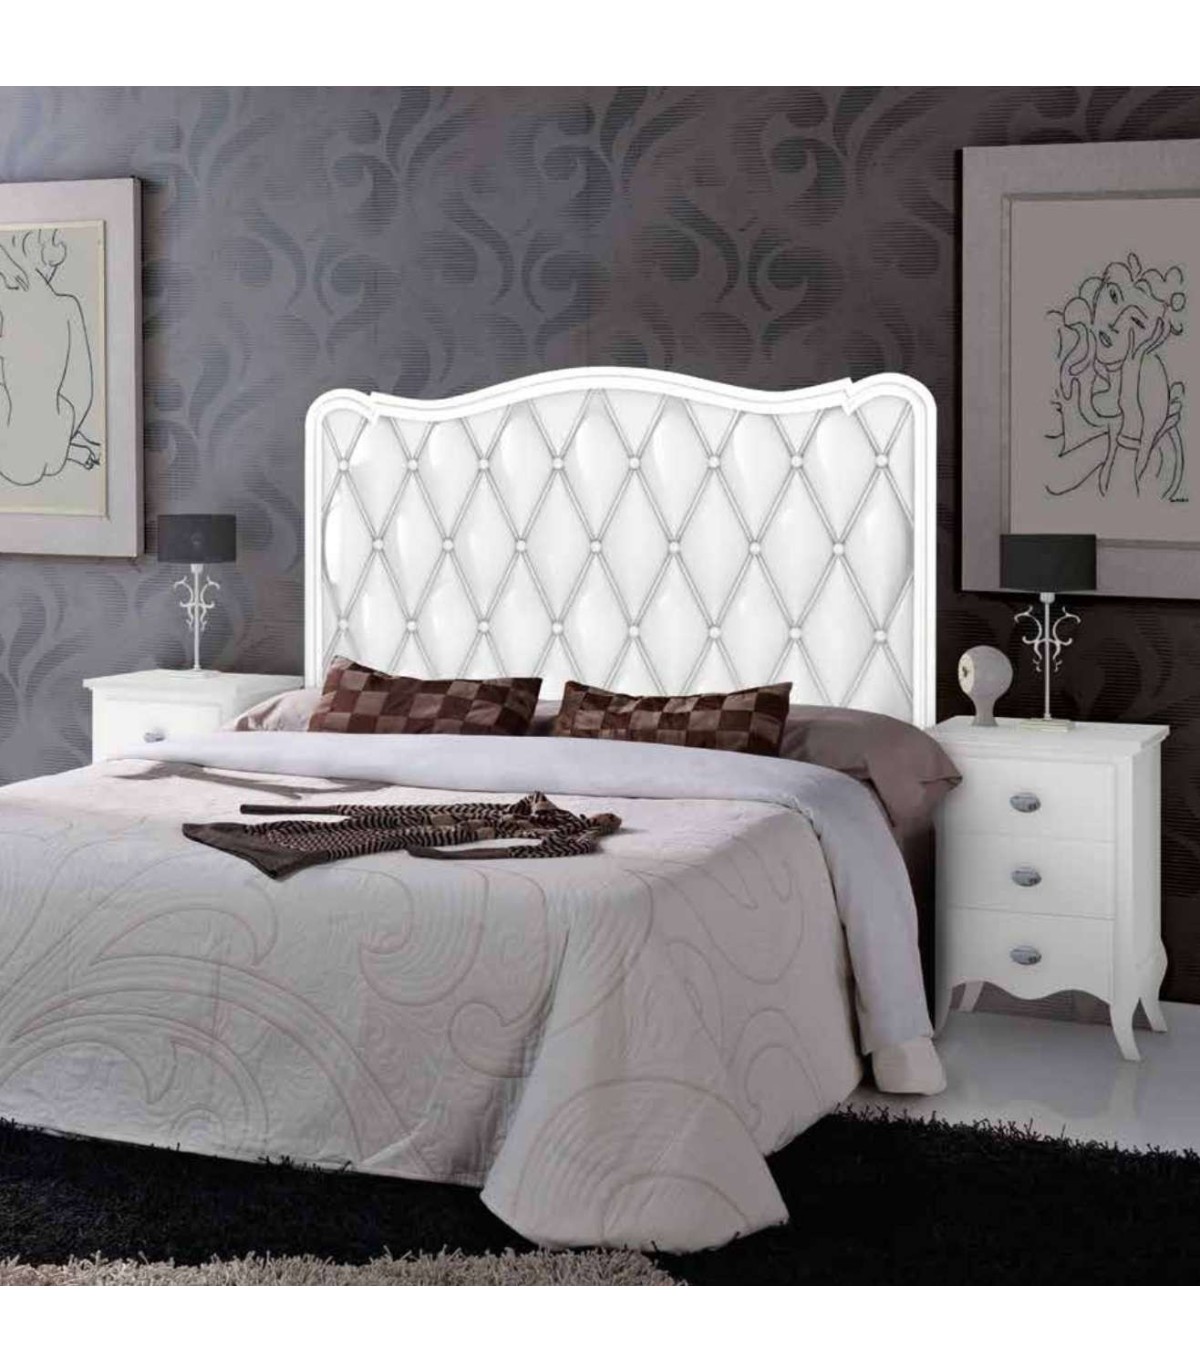 Dormitorio tapizado linea clásica